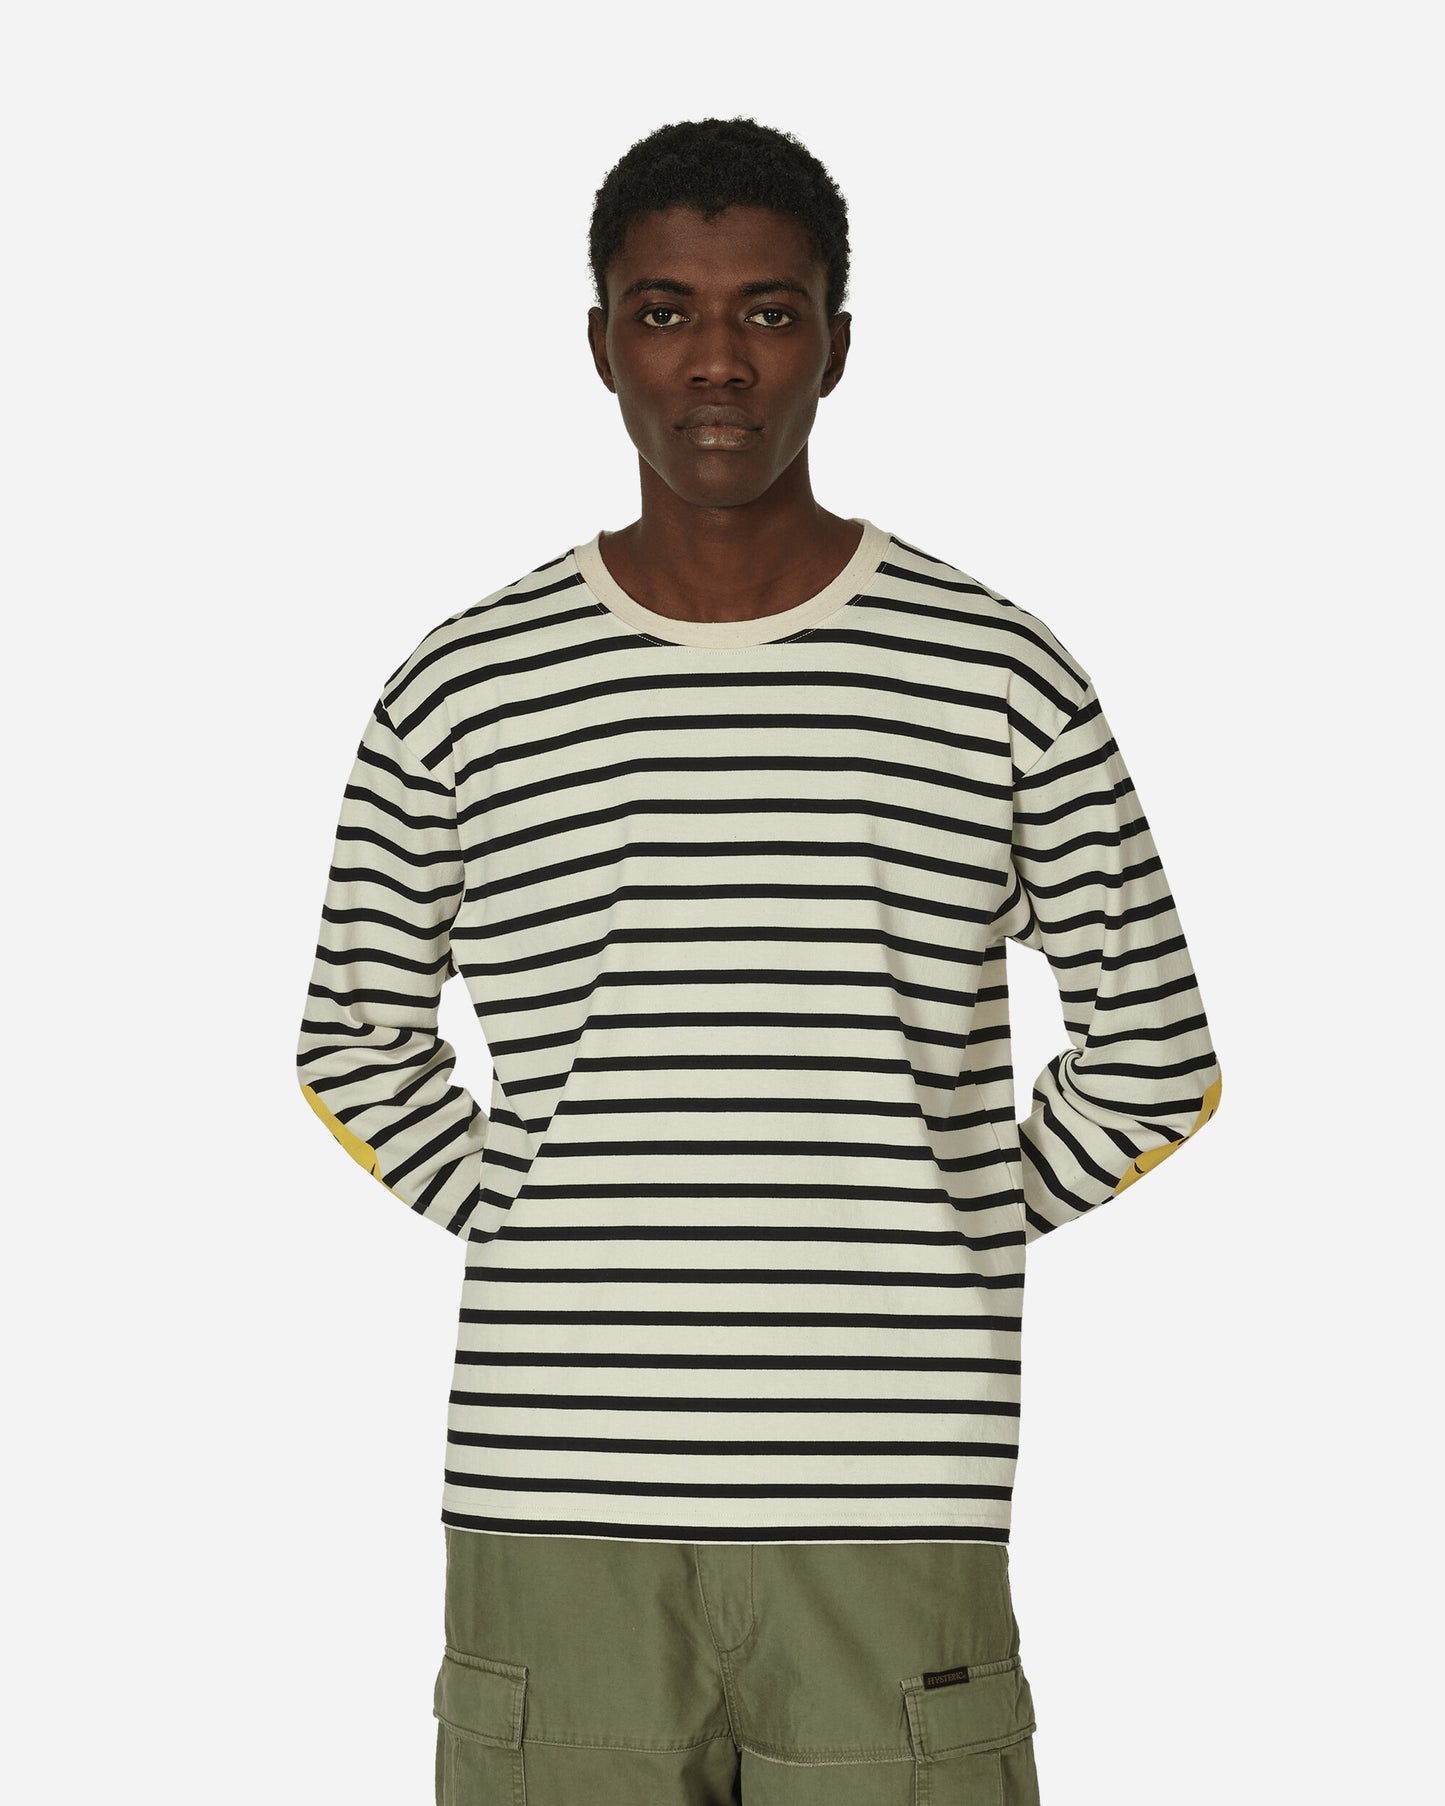 KAPITAL Stripe Jersey Crew Long Sleeve T (Profile Rainbowy Patch) Blkxecr T-Shirts Longsleeve PEK-1432 2